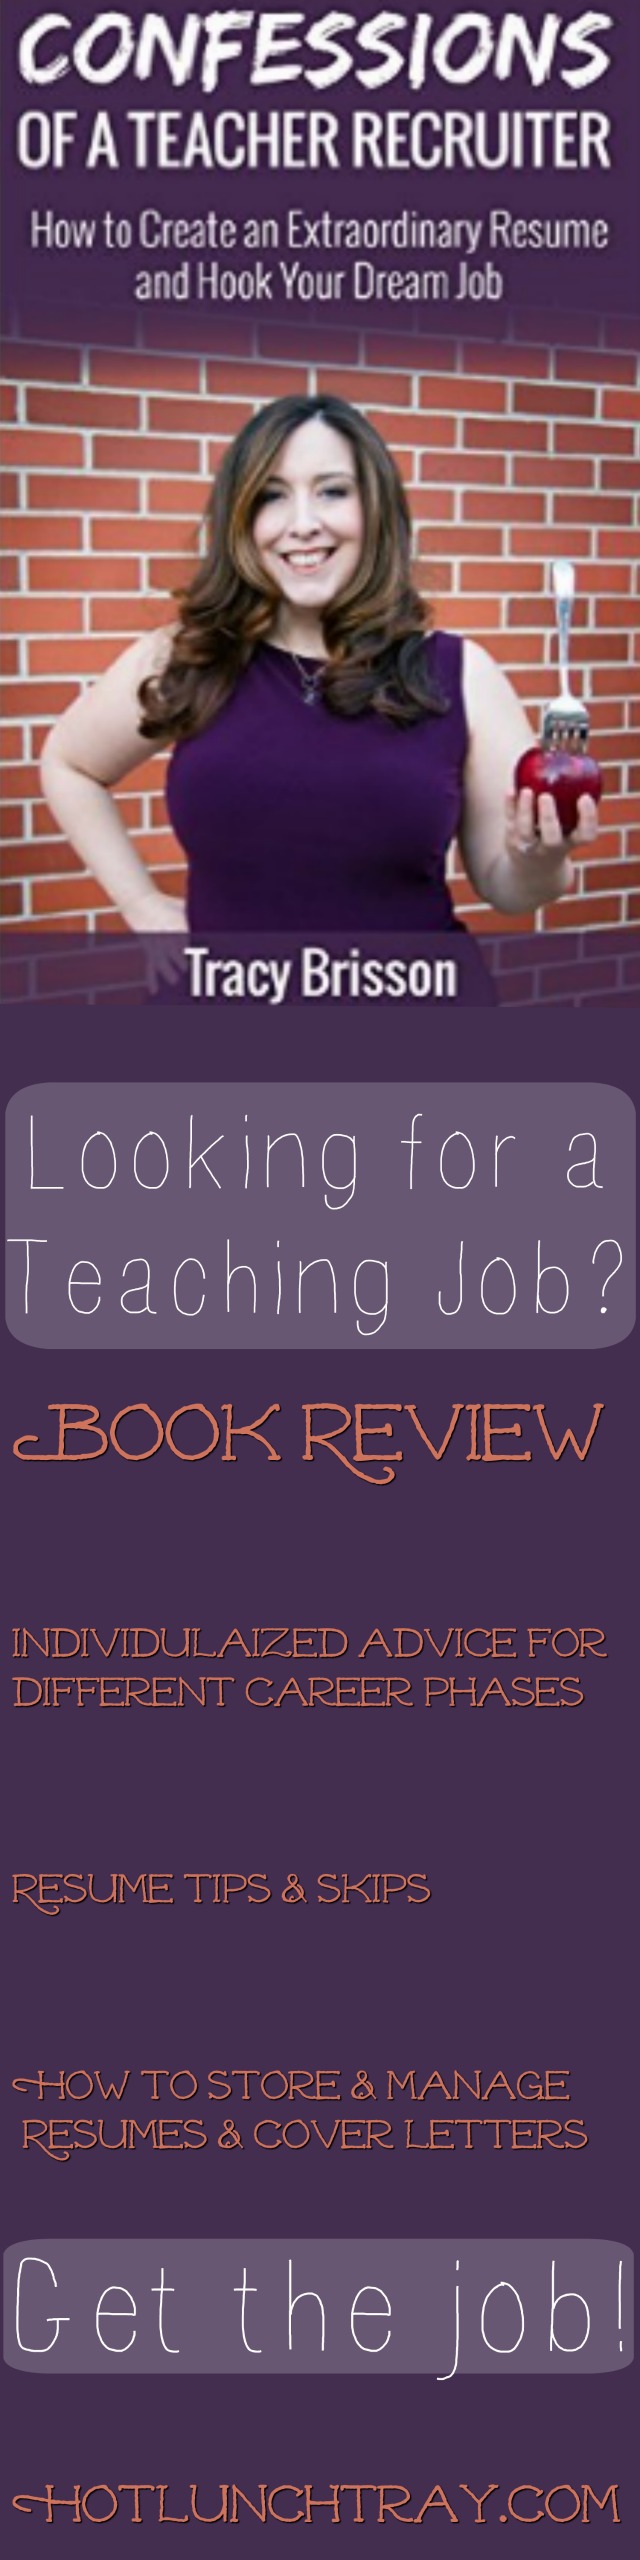 Confessions of a teacher recruiter